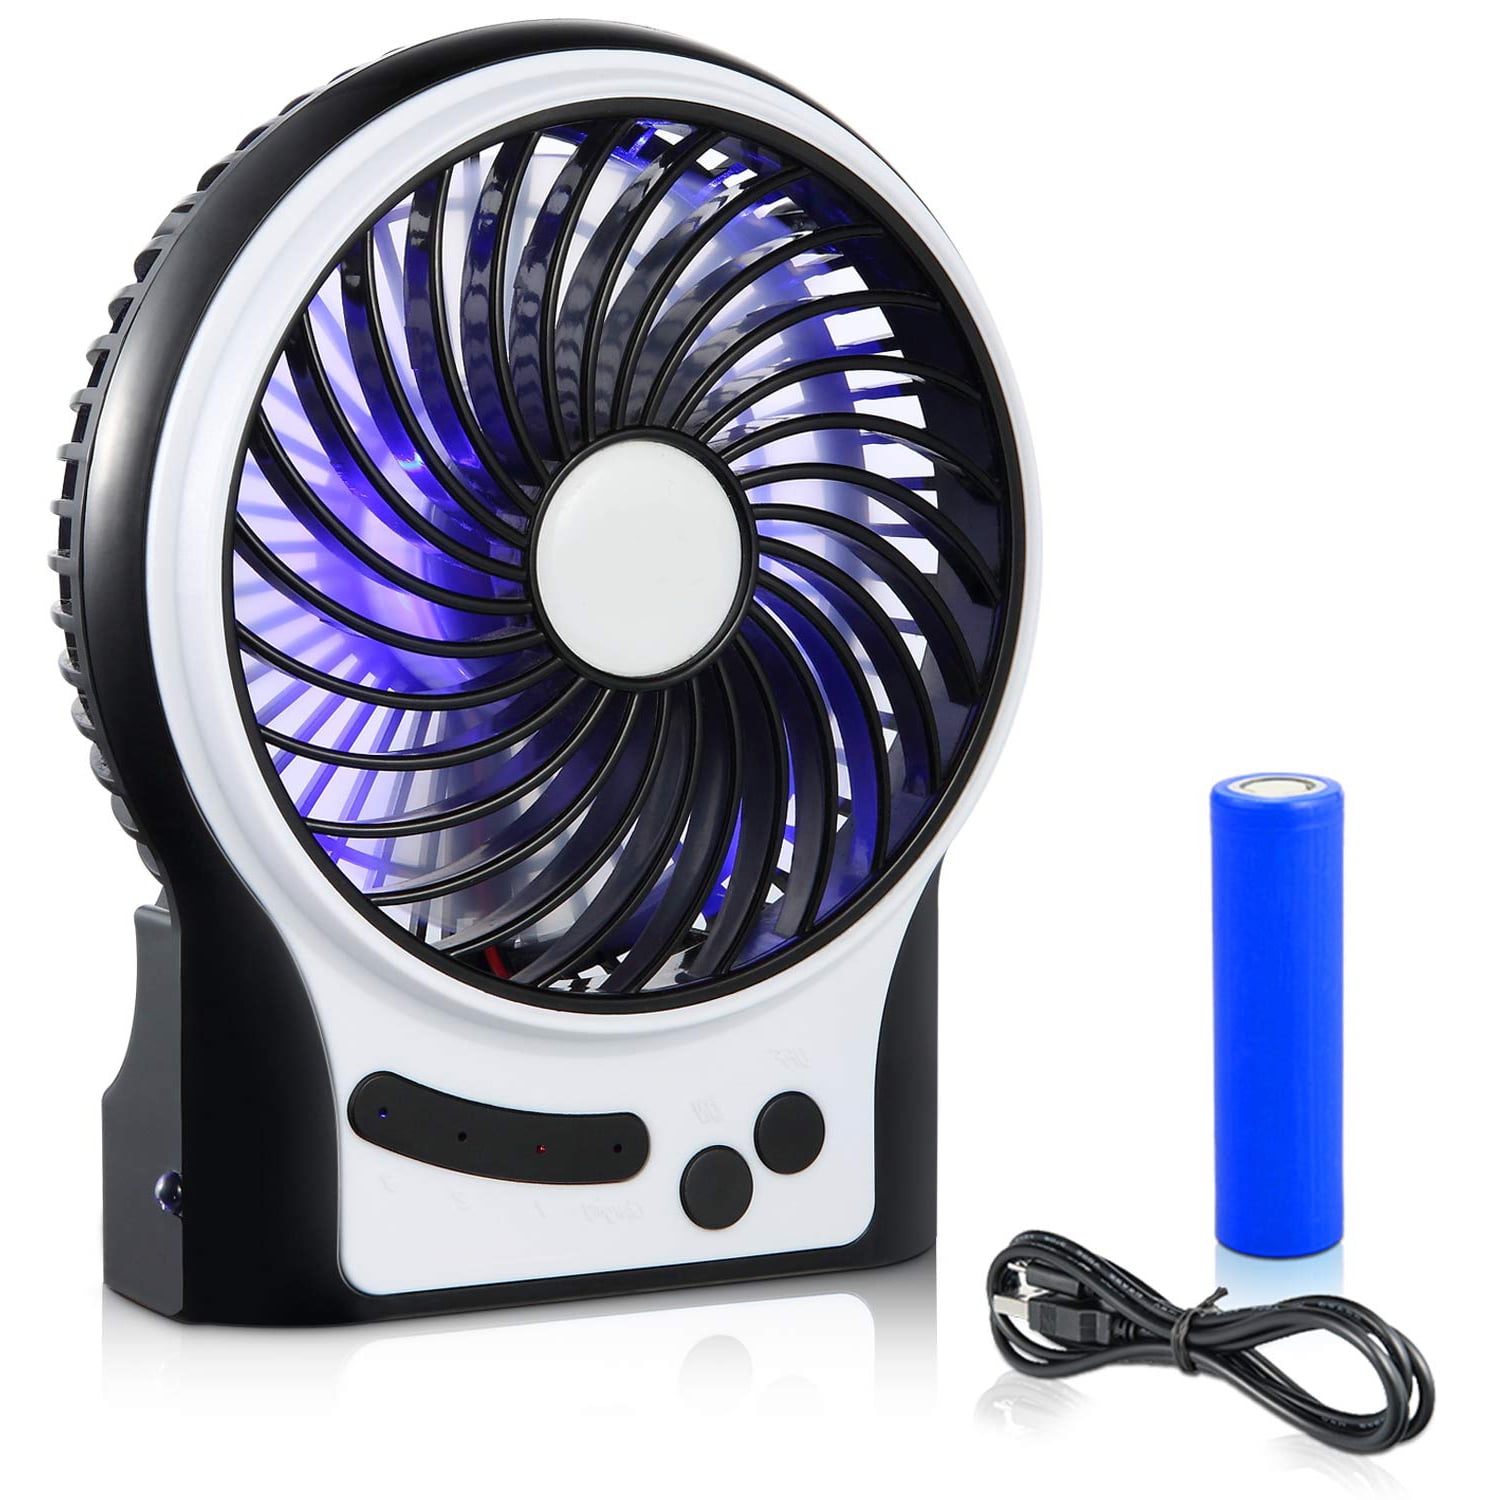 3 Speeds USB Mini Desk Fan Portable Table Fan Air Cooling Home Office Cooler